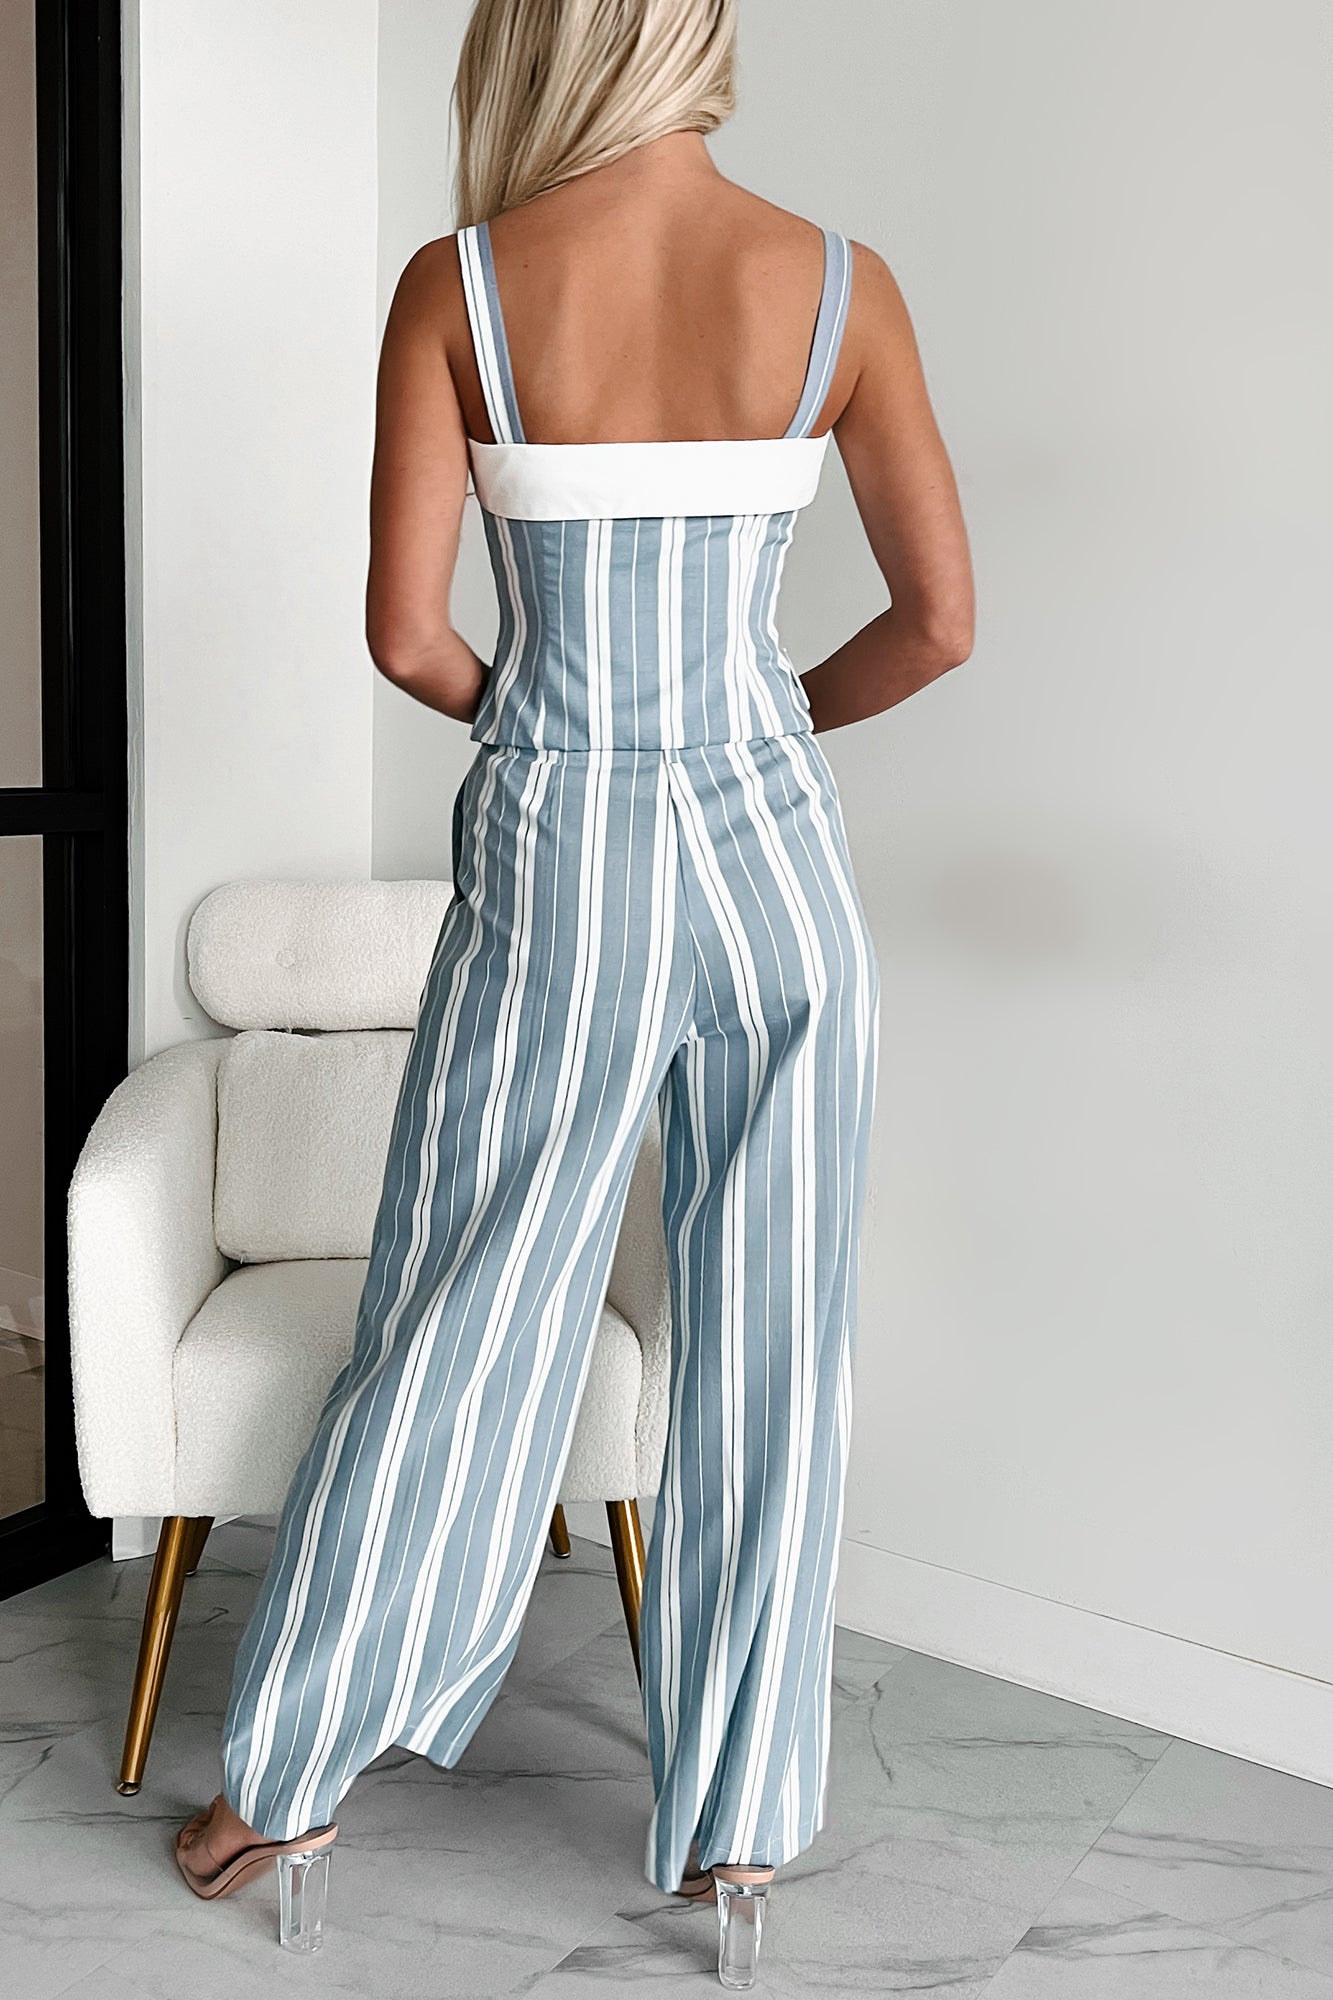 Strictly Professional Striped Two-Piece Pant Set (Dusty Blue/White) - NanaMacs